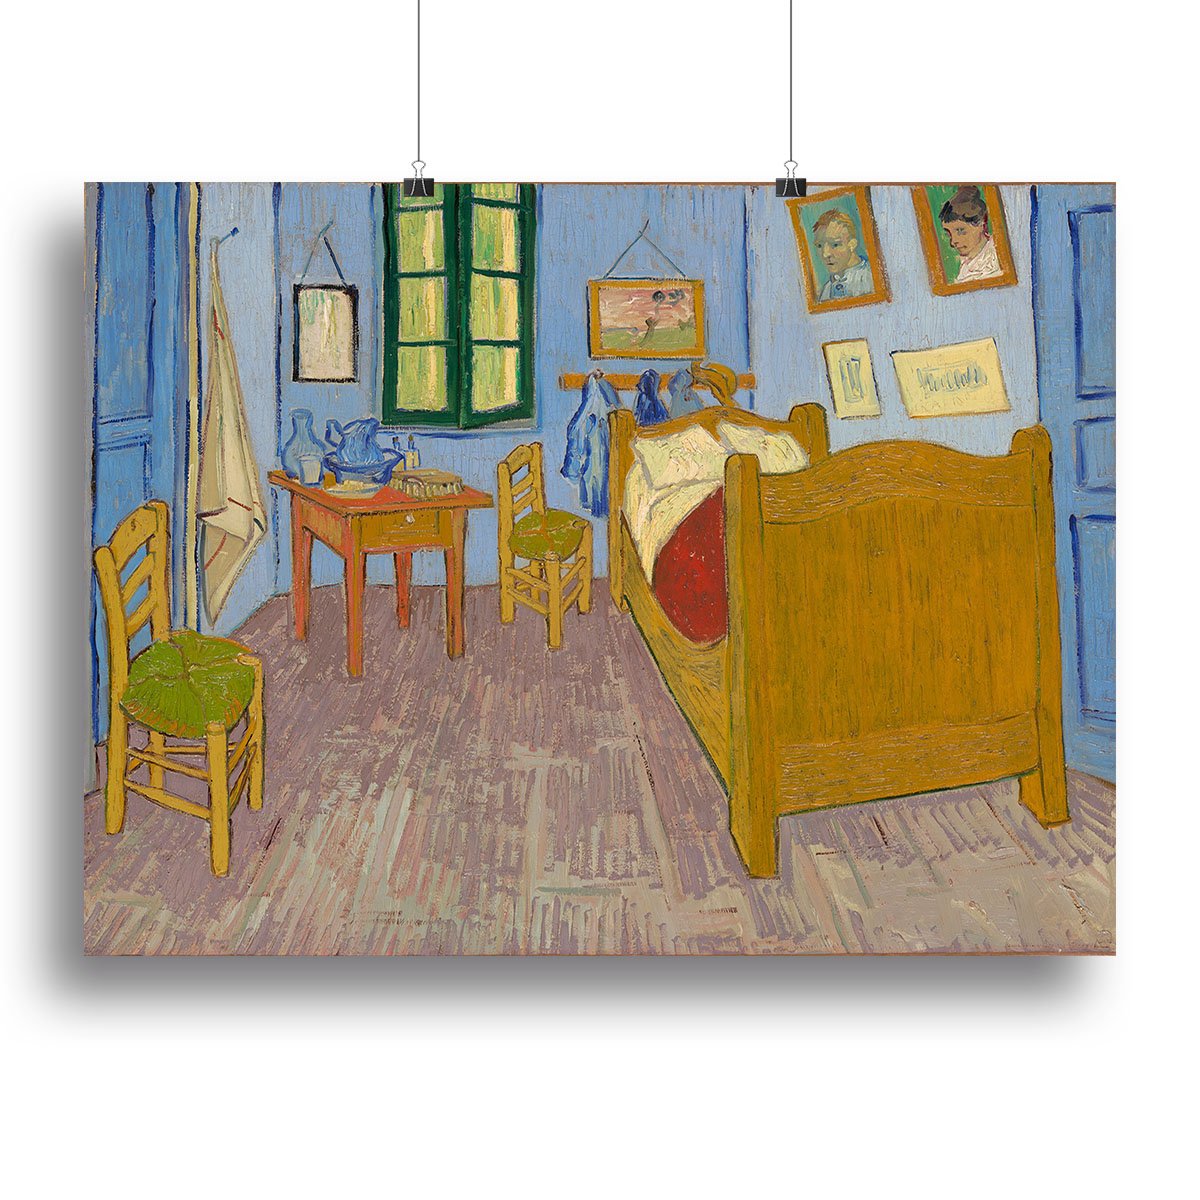 Vincents bedroom at Arles Canvas Print or Poster